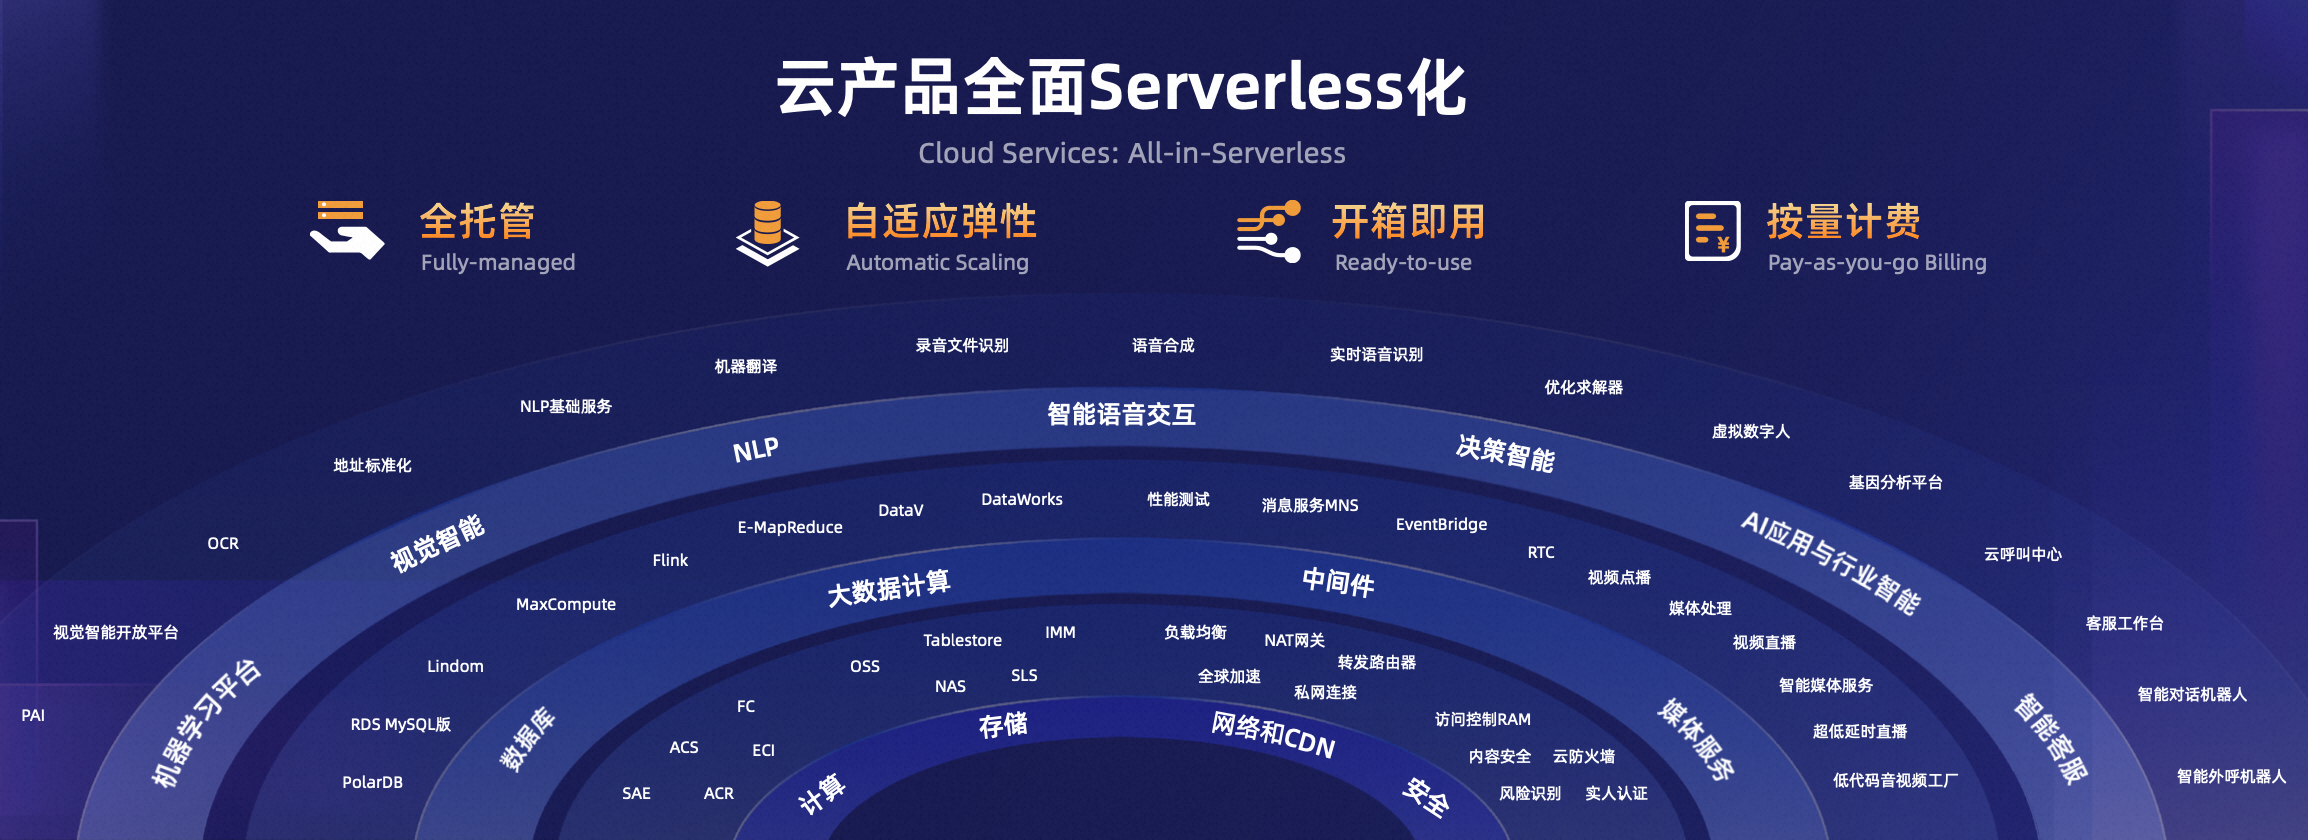 Serverless化云产品超40款  阿里云发布全球首款容器计算服务